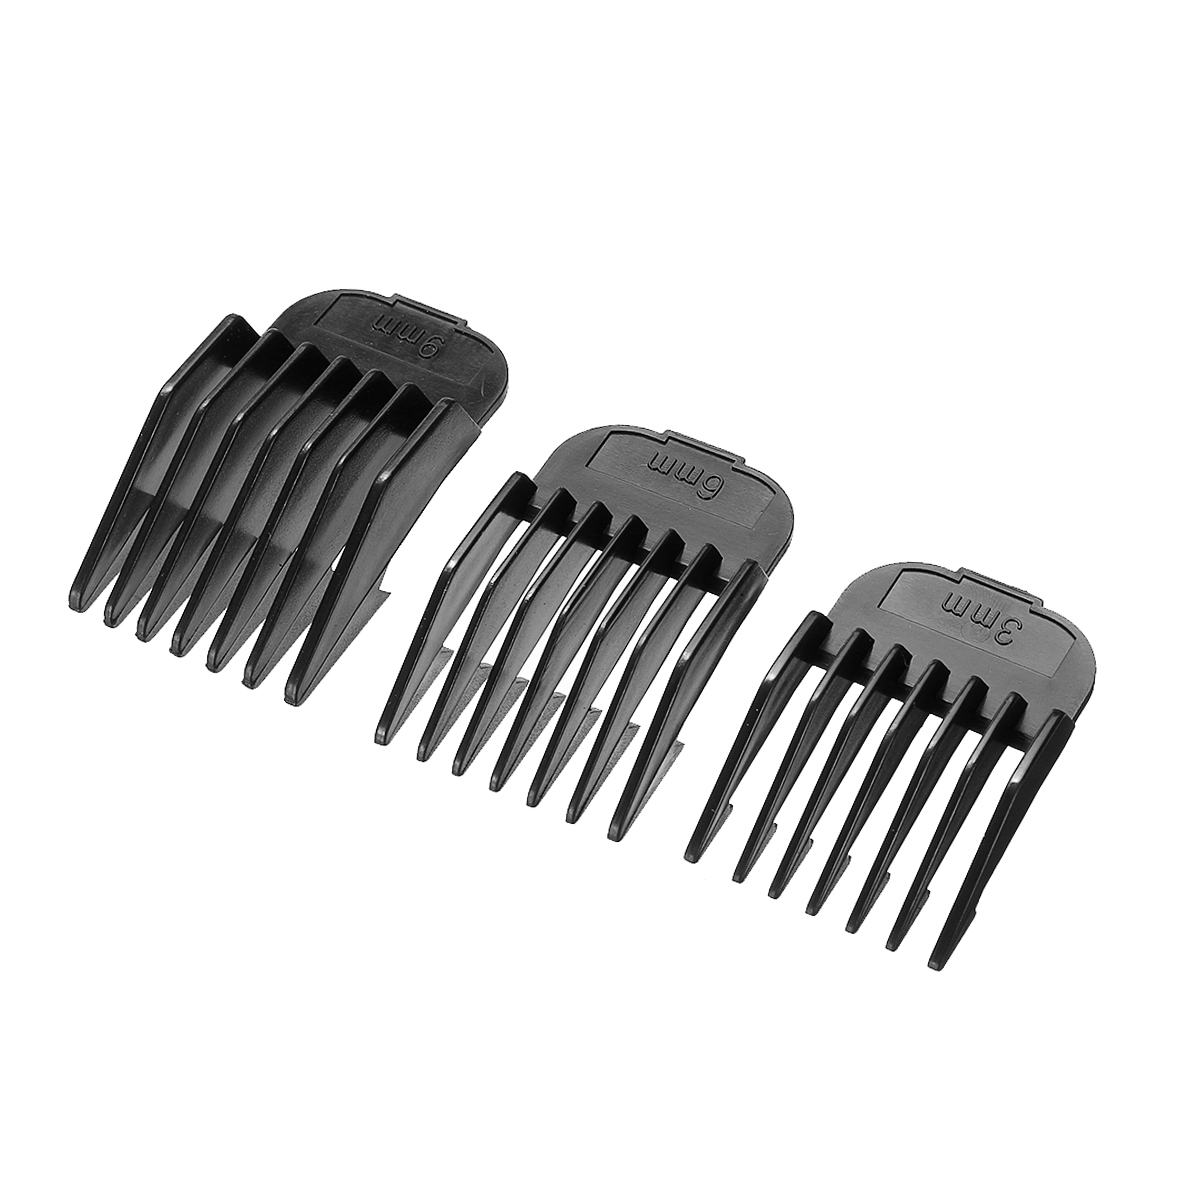 Kemei-KM-604B-Electric-Hair-Trimmer-Head-Shaver-Beard-Cut-Cordless-Clipper-Rechargeable-for-Men-1433171